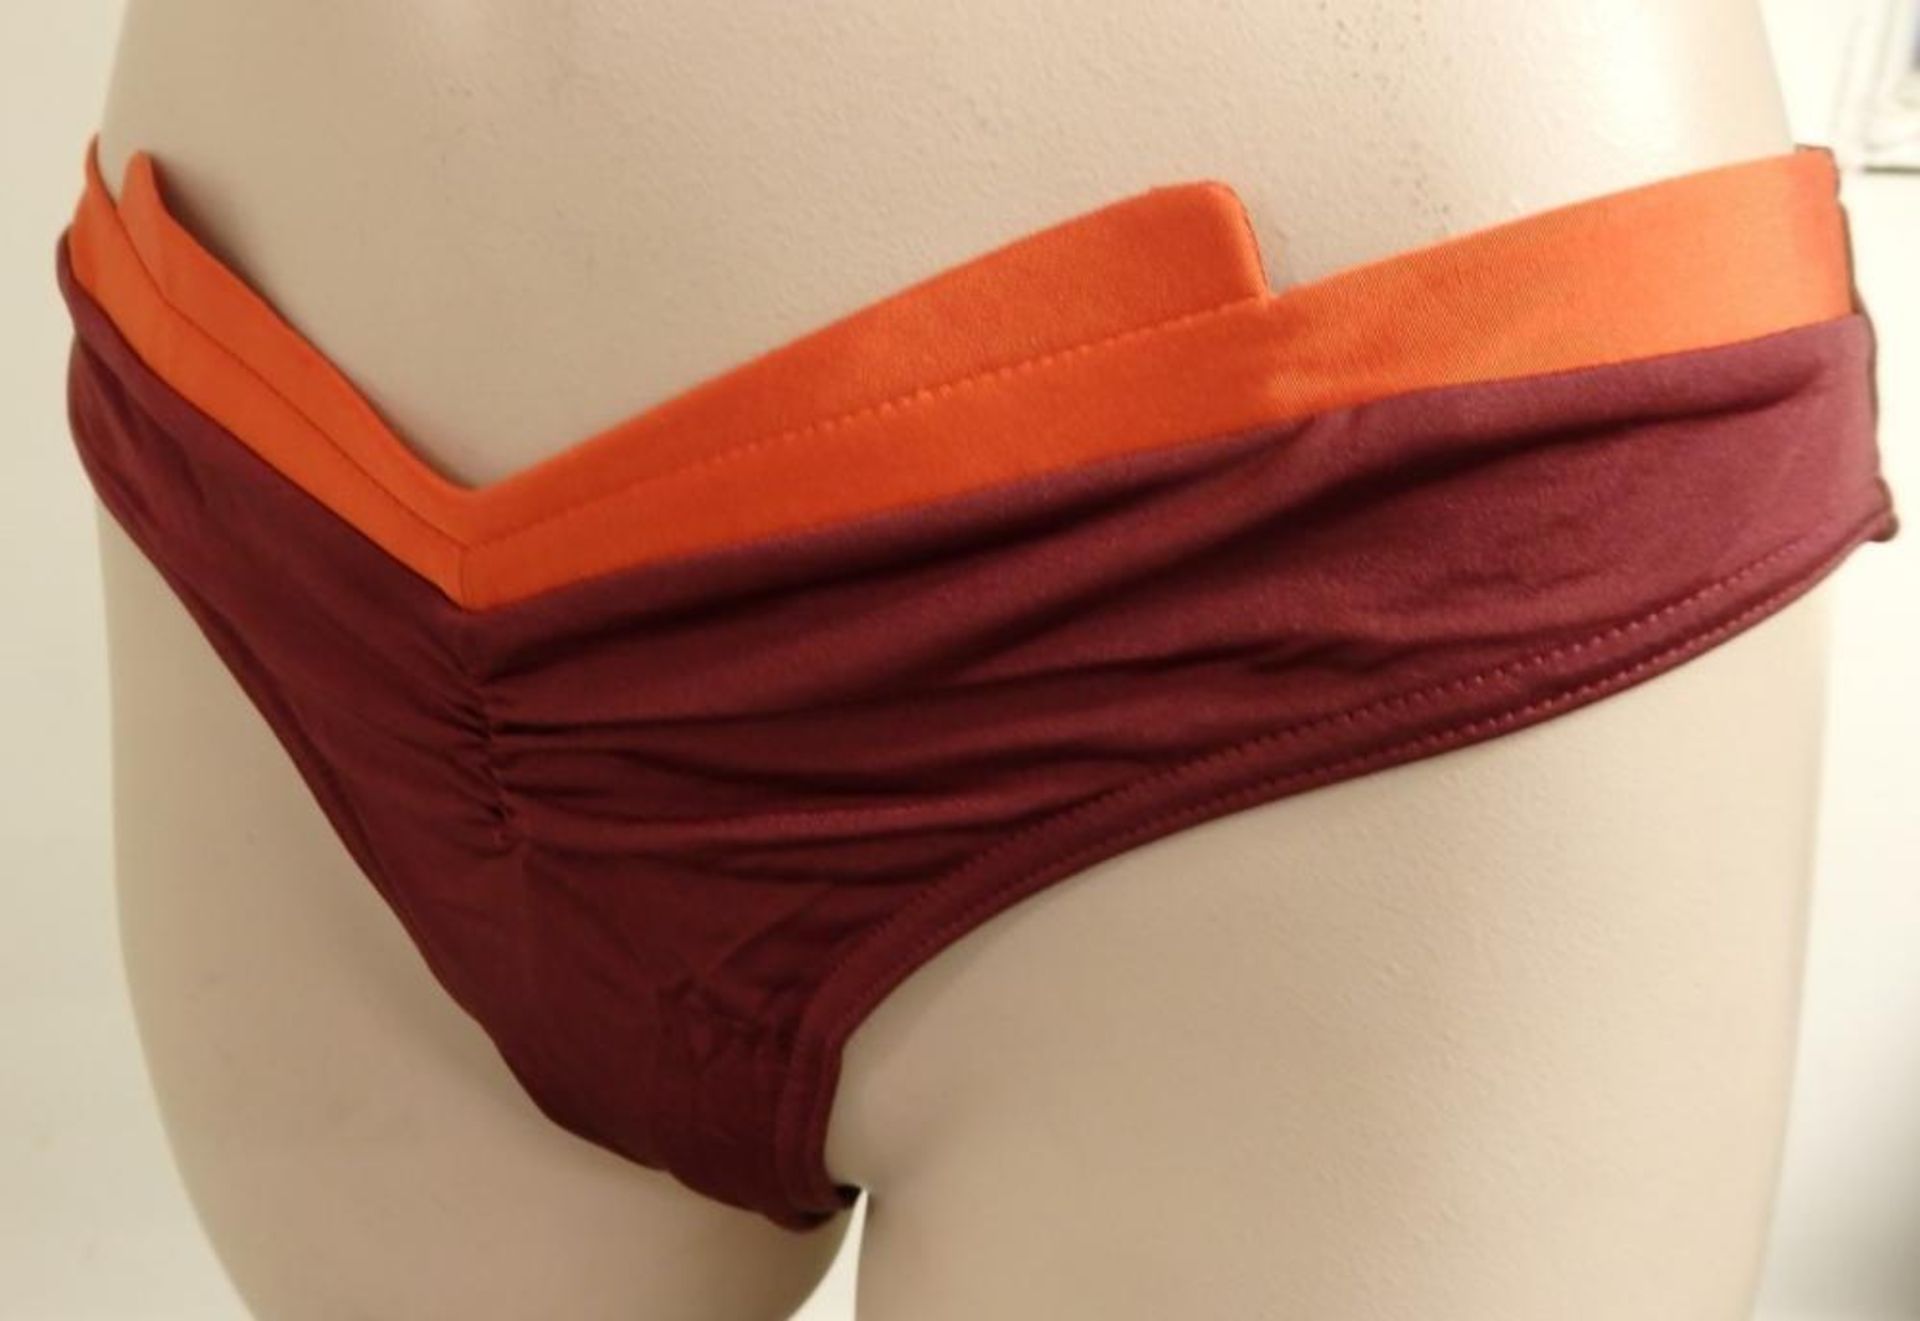 1 x Rasurel - Damson and Orange trim Bikini - R20346 Brassiere - Mini Slip - Size 2C - UK 32 - Fr 85 - Image 4 of 6